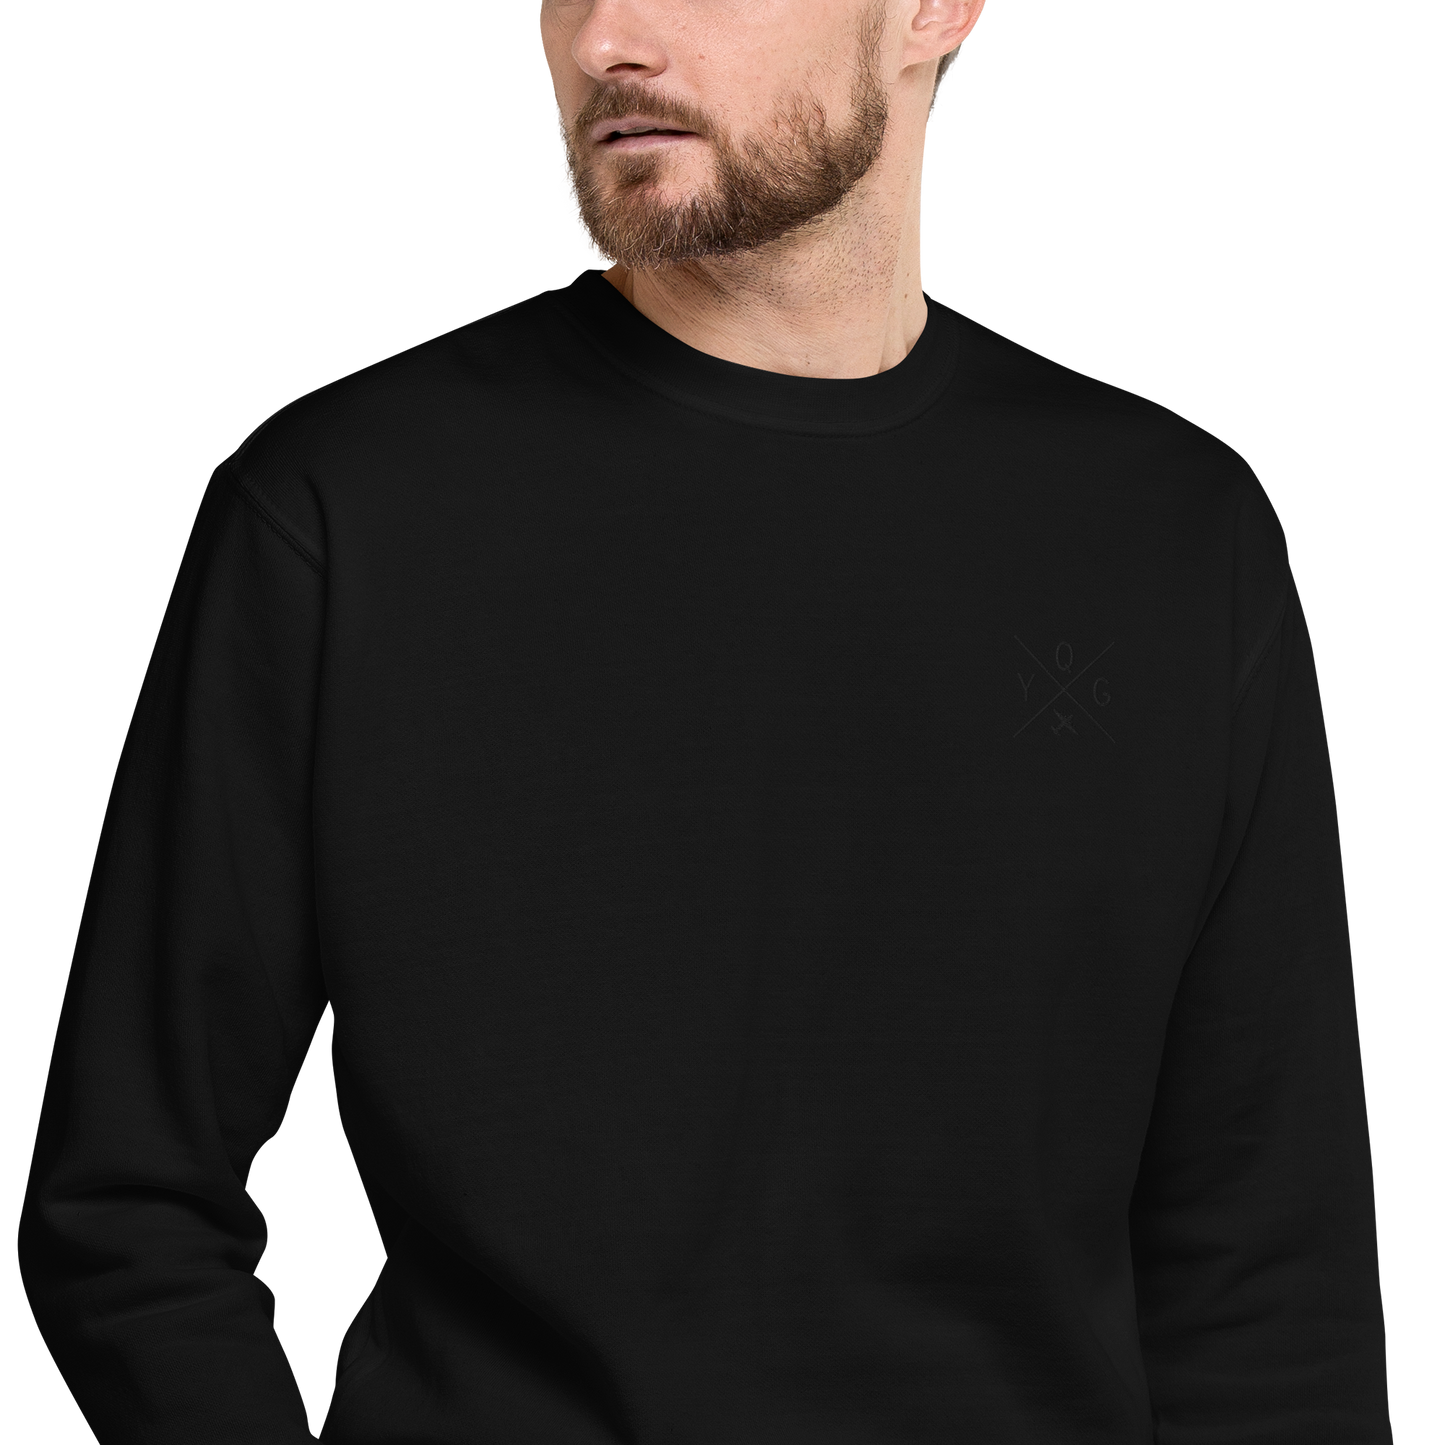 YHM Designs - YQG Windsor Premium Sweatshirt - Crossed-X Design with Airport Code and Vintage Propliner - Black Embroidery - Image 05